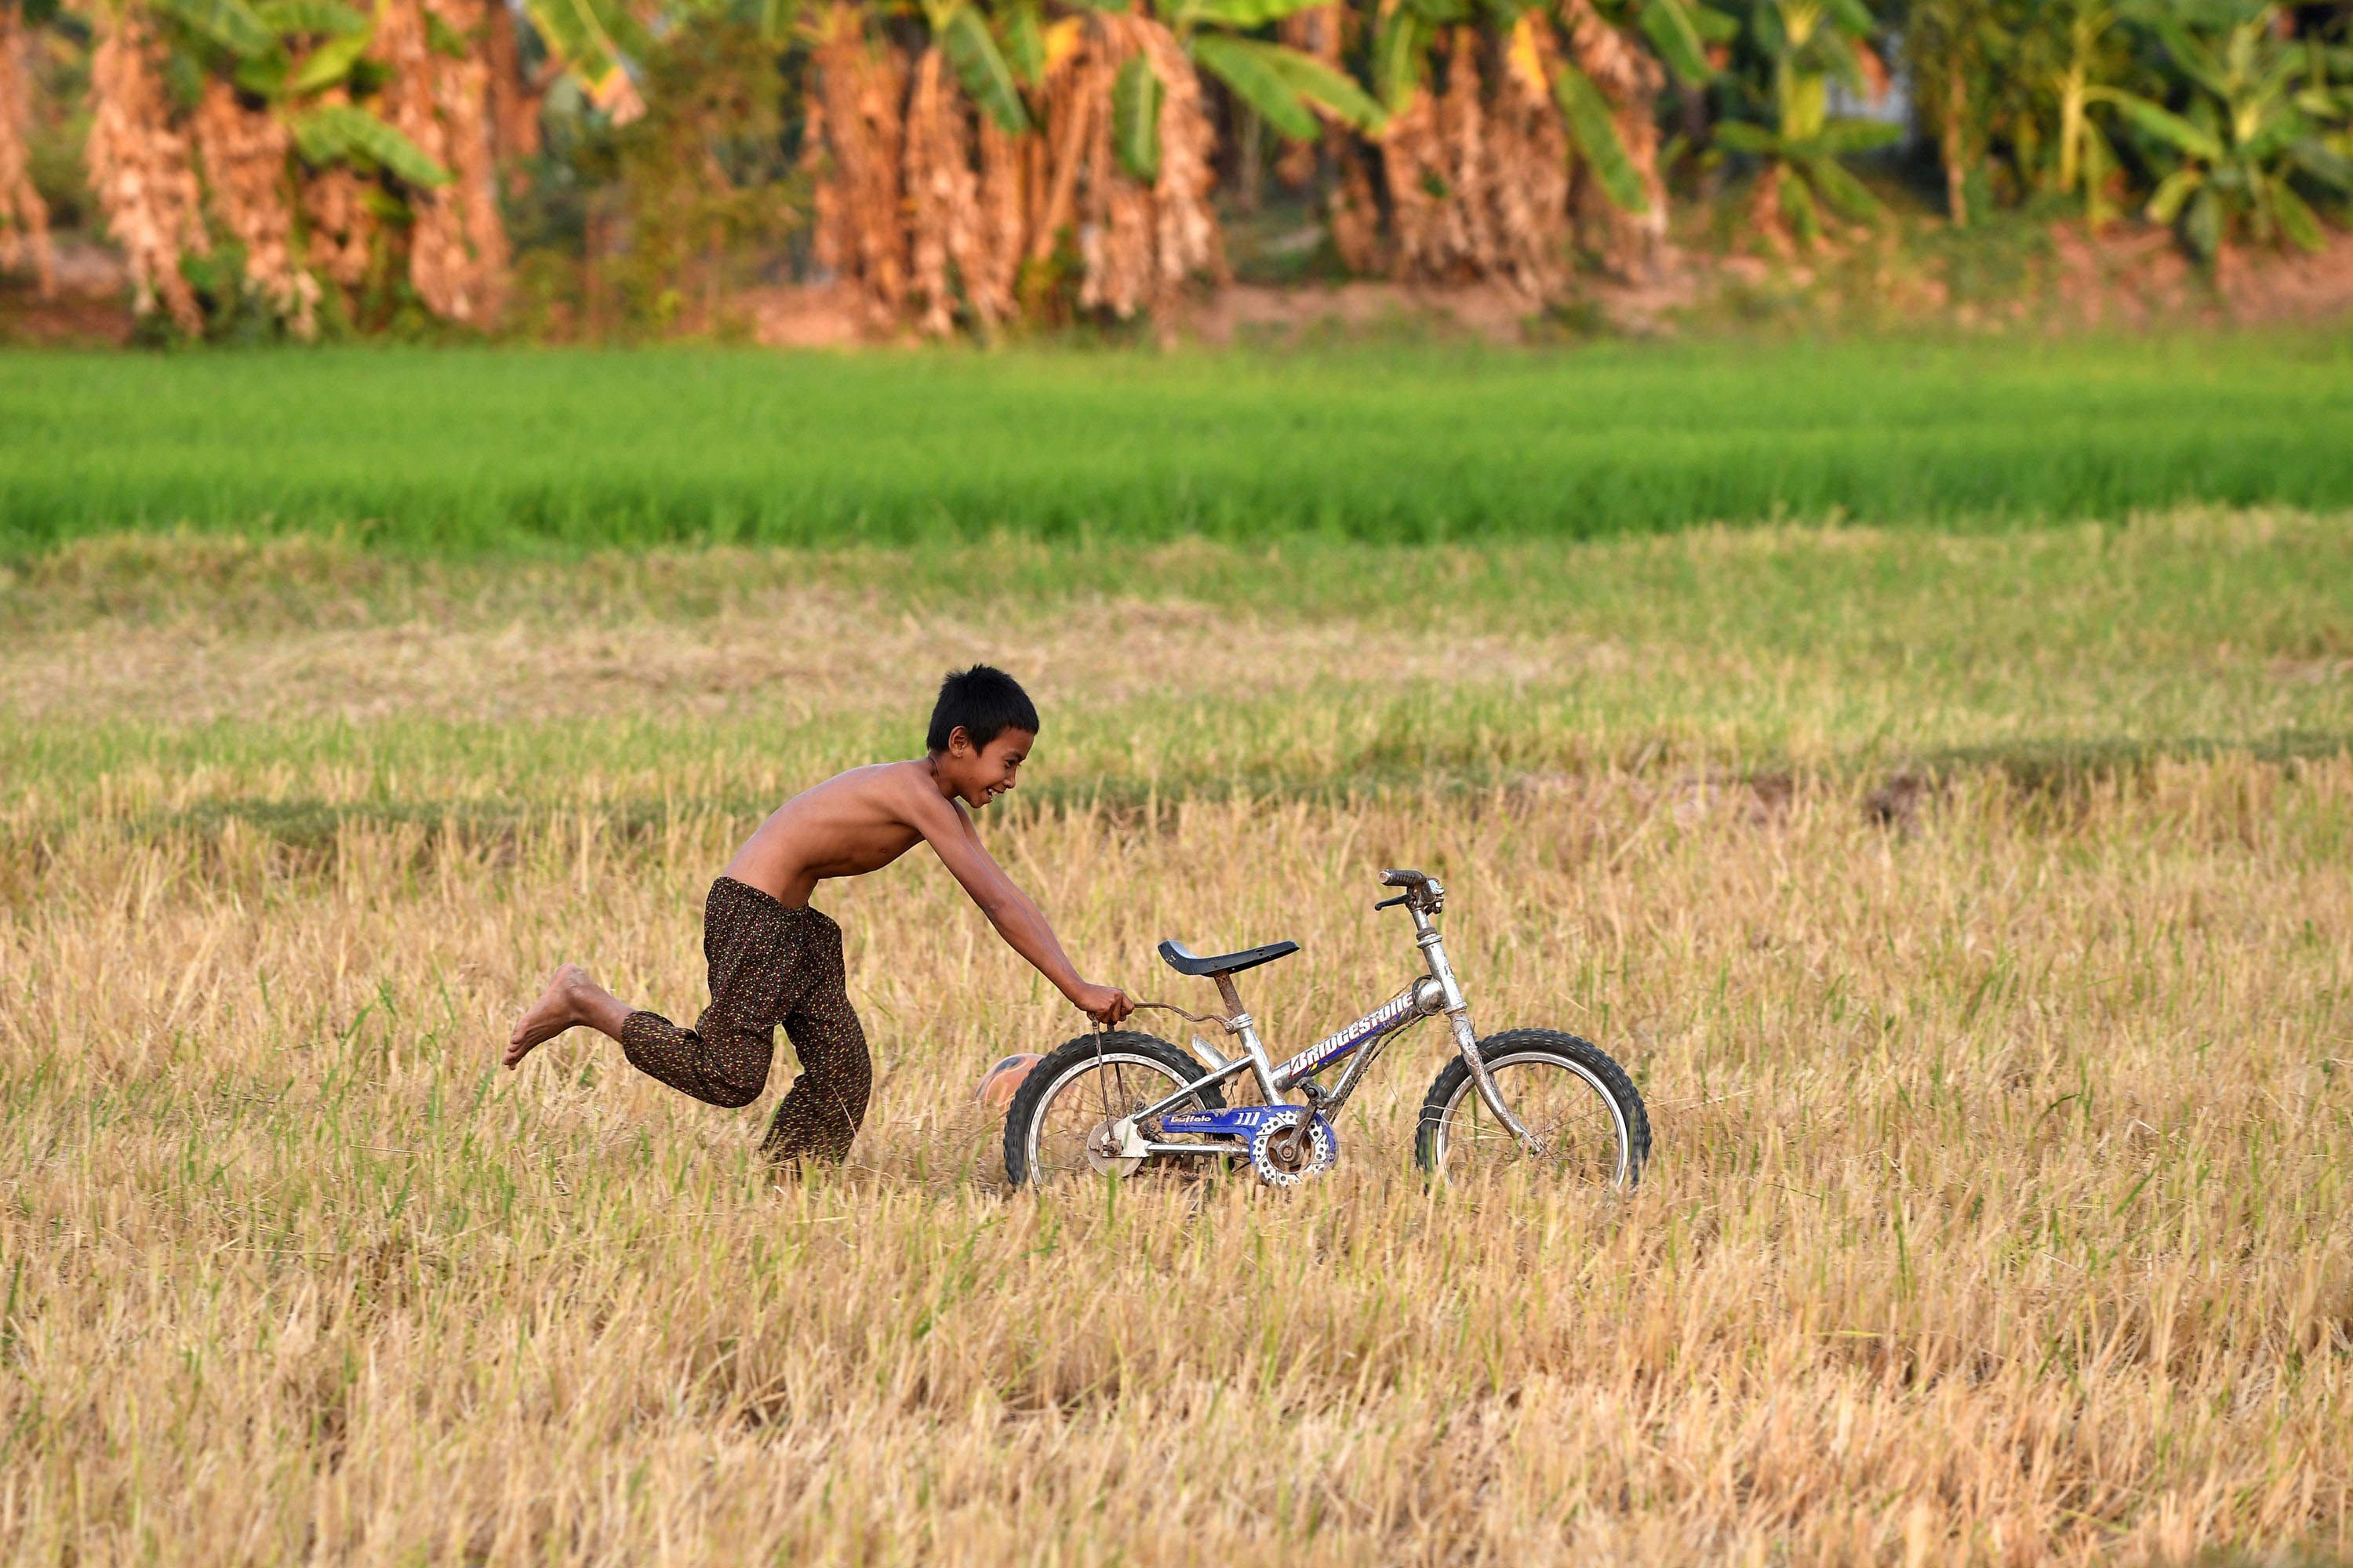 A rice field in Cambodia.